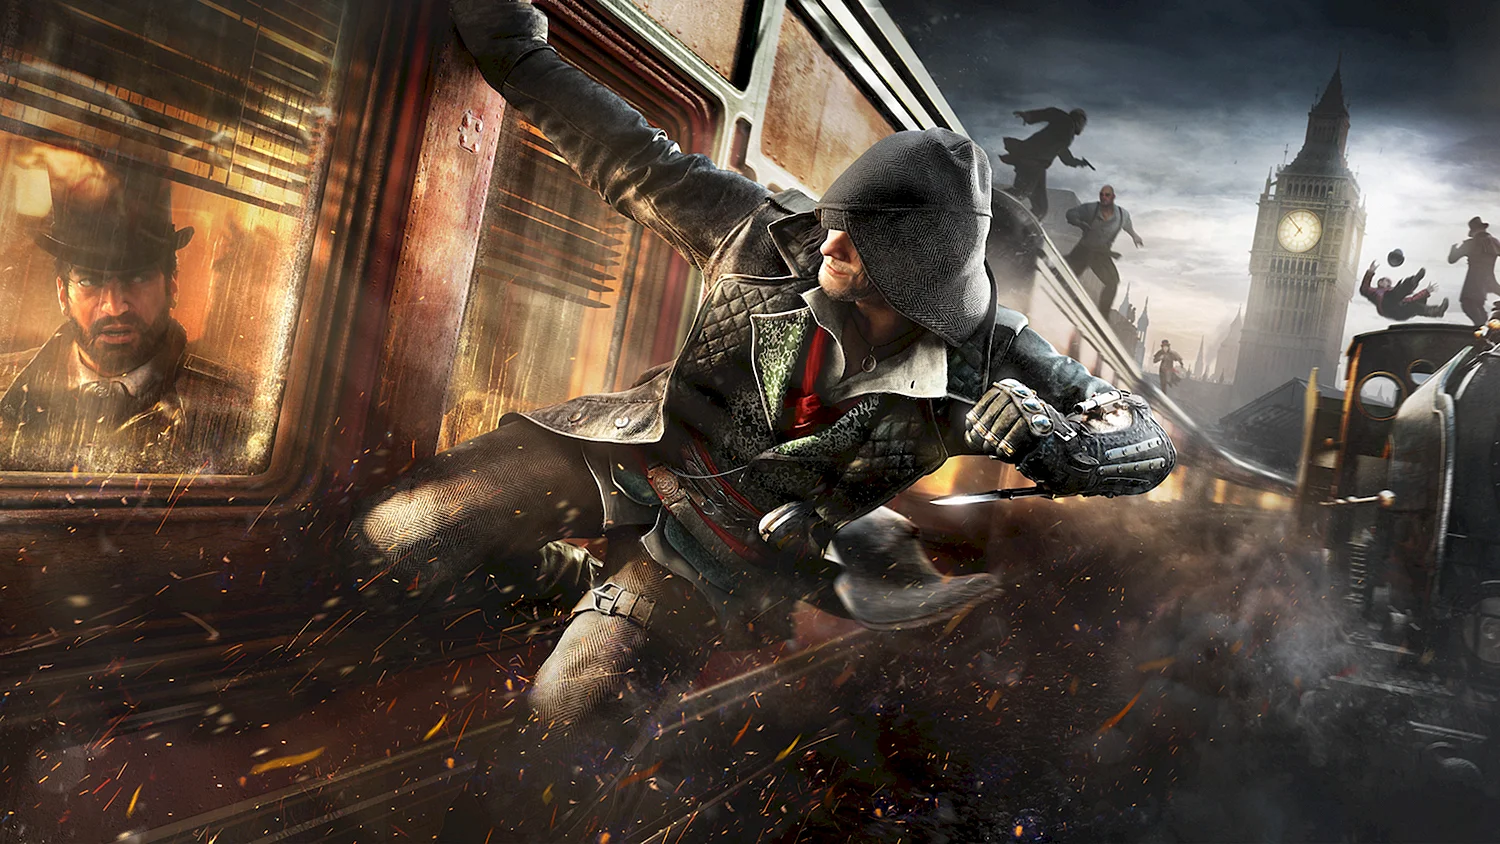 Assassin's Creed Синдикат